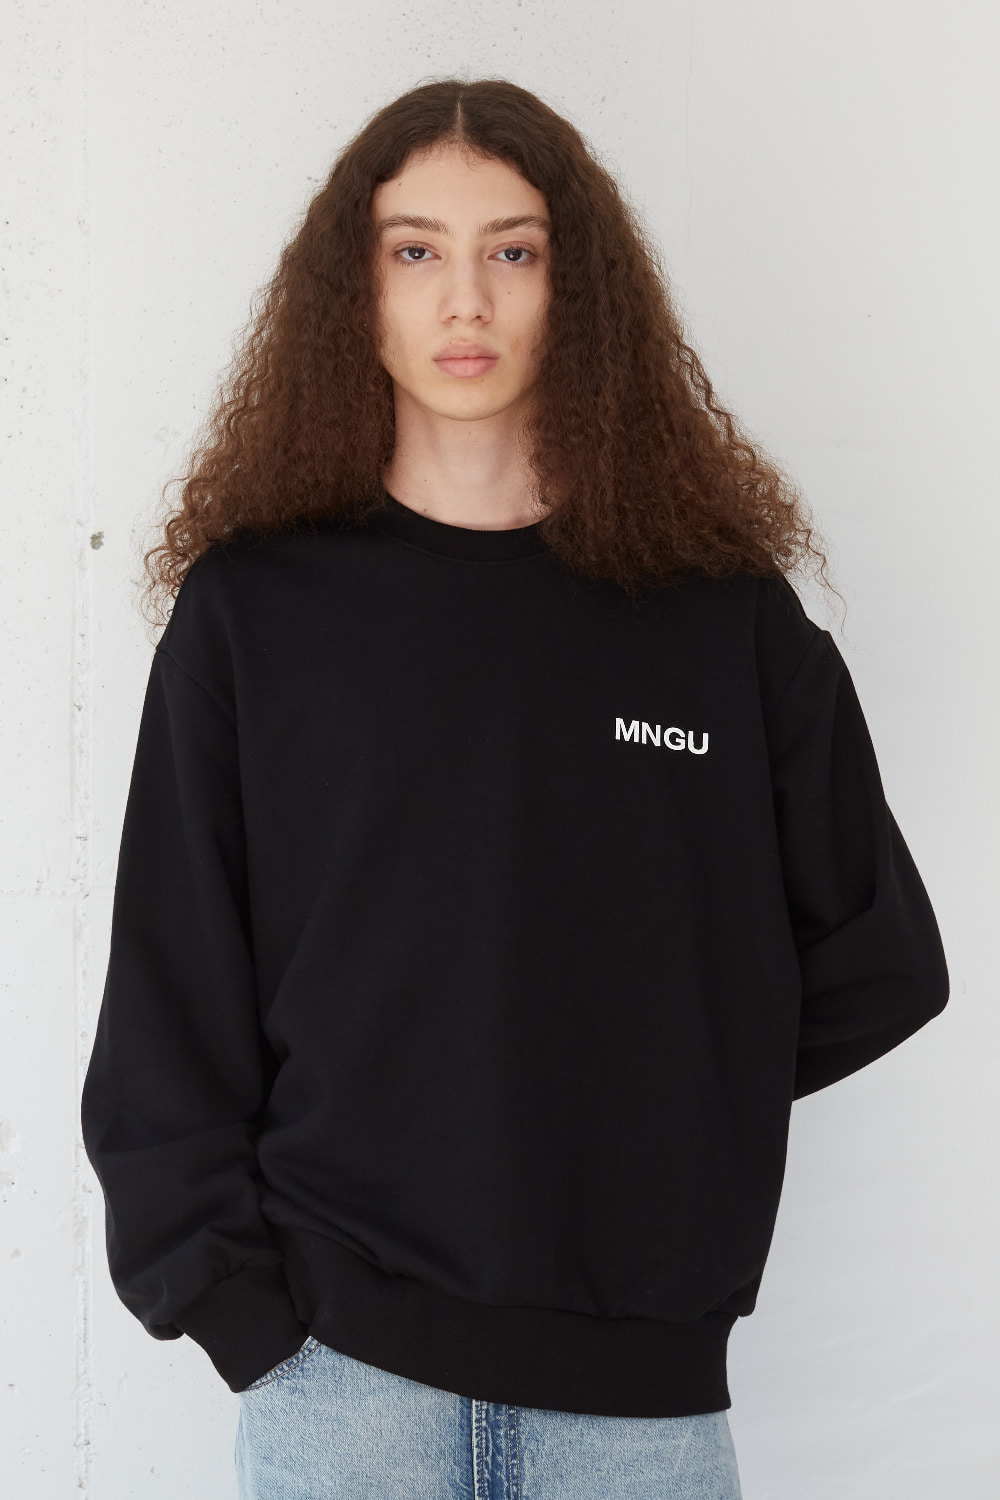 [-10%] MNGU 로고 스웨트셔츠 IN 블랙